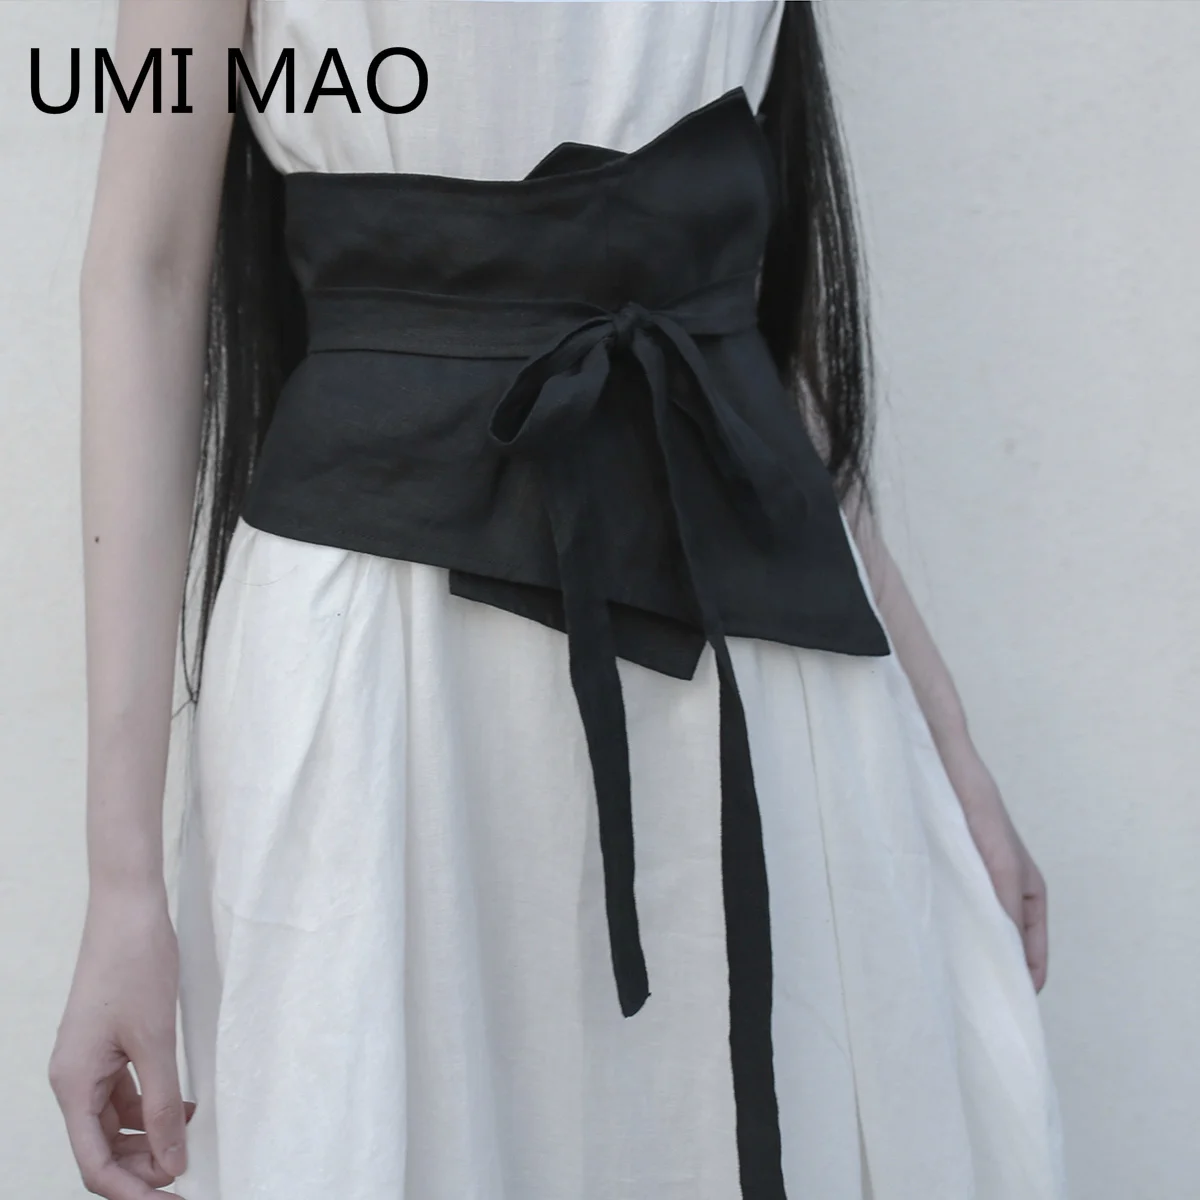 UMI MAO Spring New Style Of Moshu Homemade Irregular Wild Linen Girdle Female Chinese Style